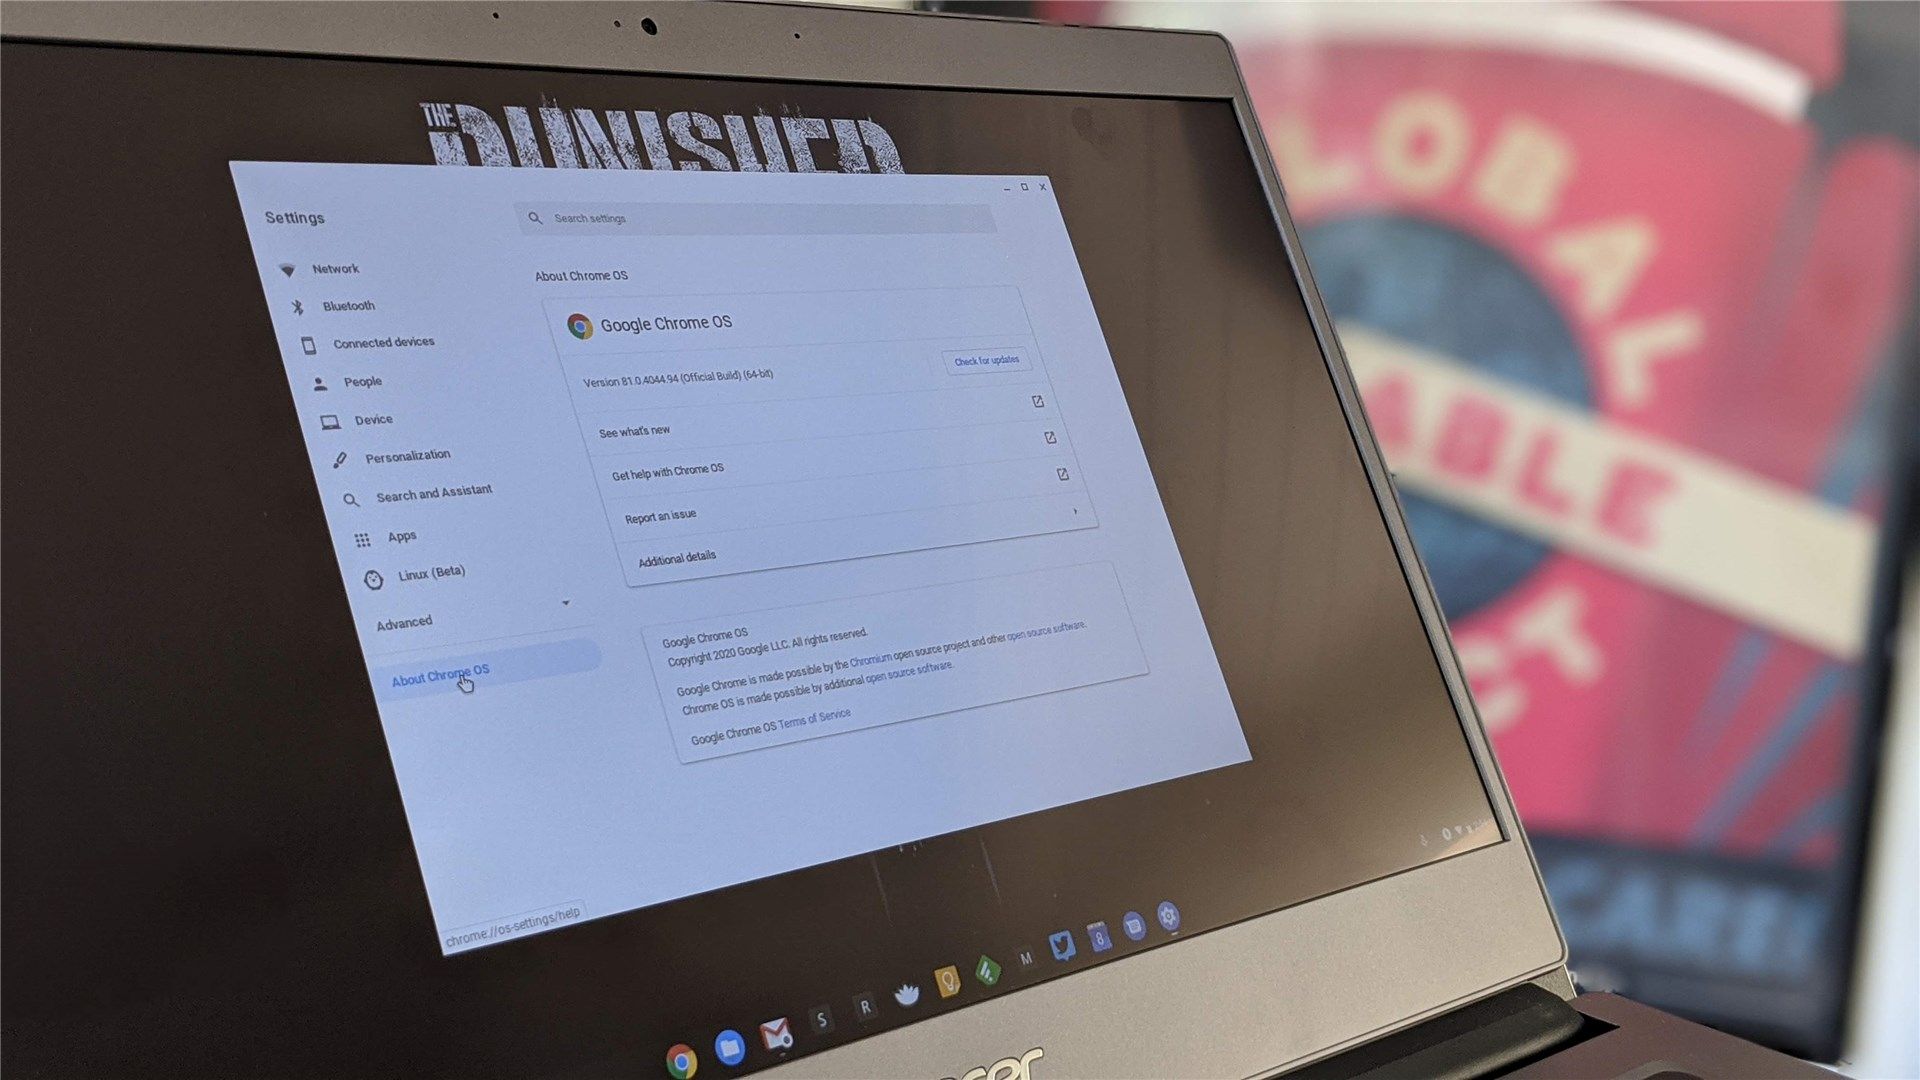 The Chrome OS settings window the Acer Chromebook 714